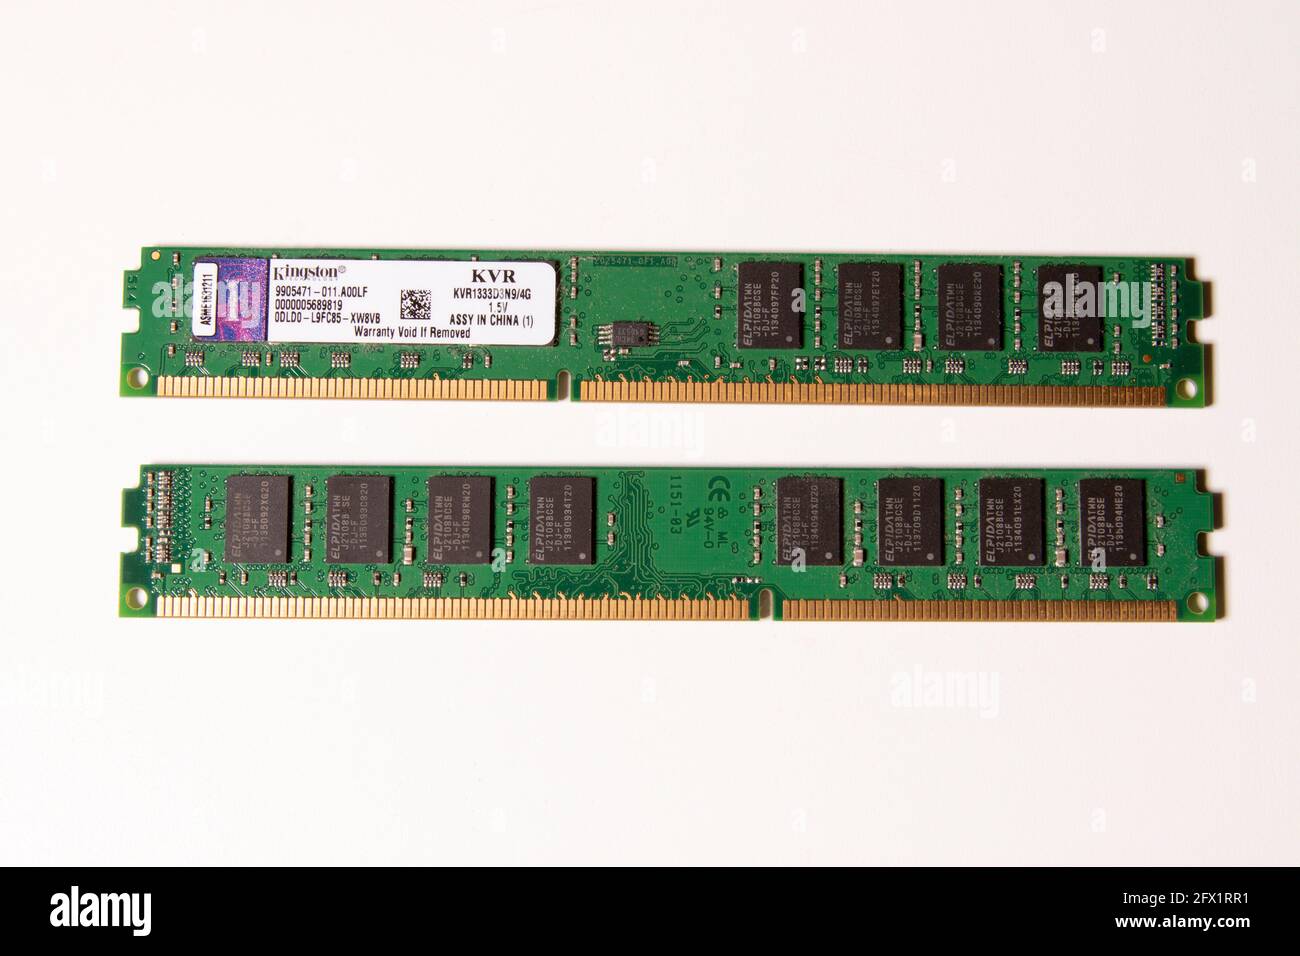 Kingston 4GB Memory Modules Stock Photo